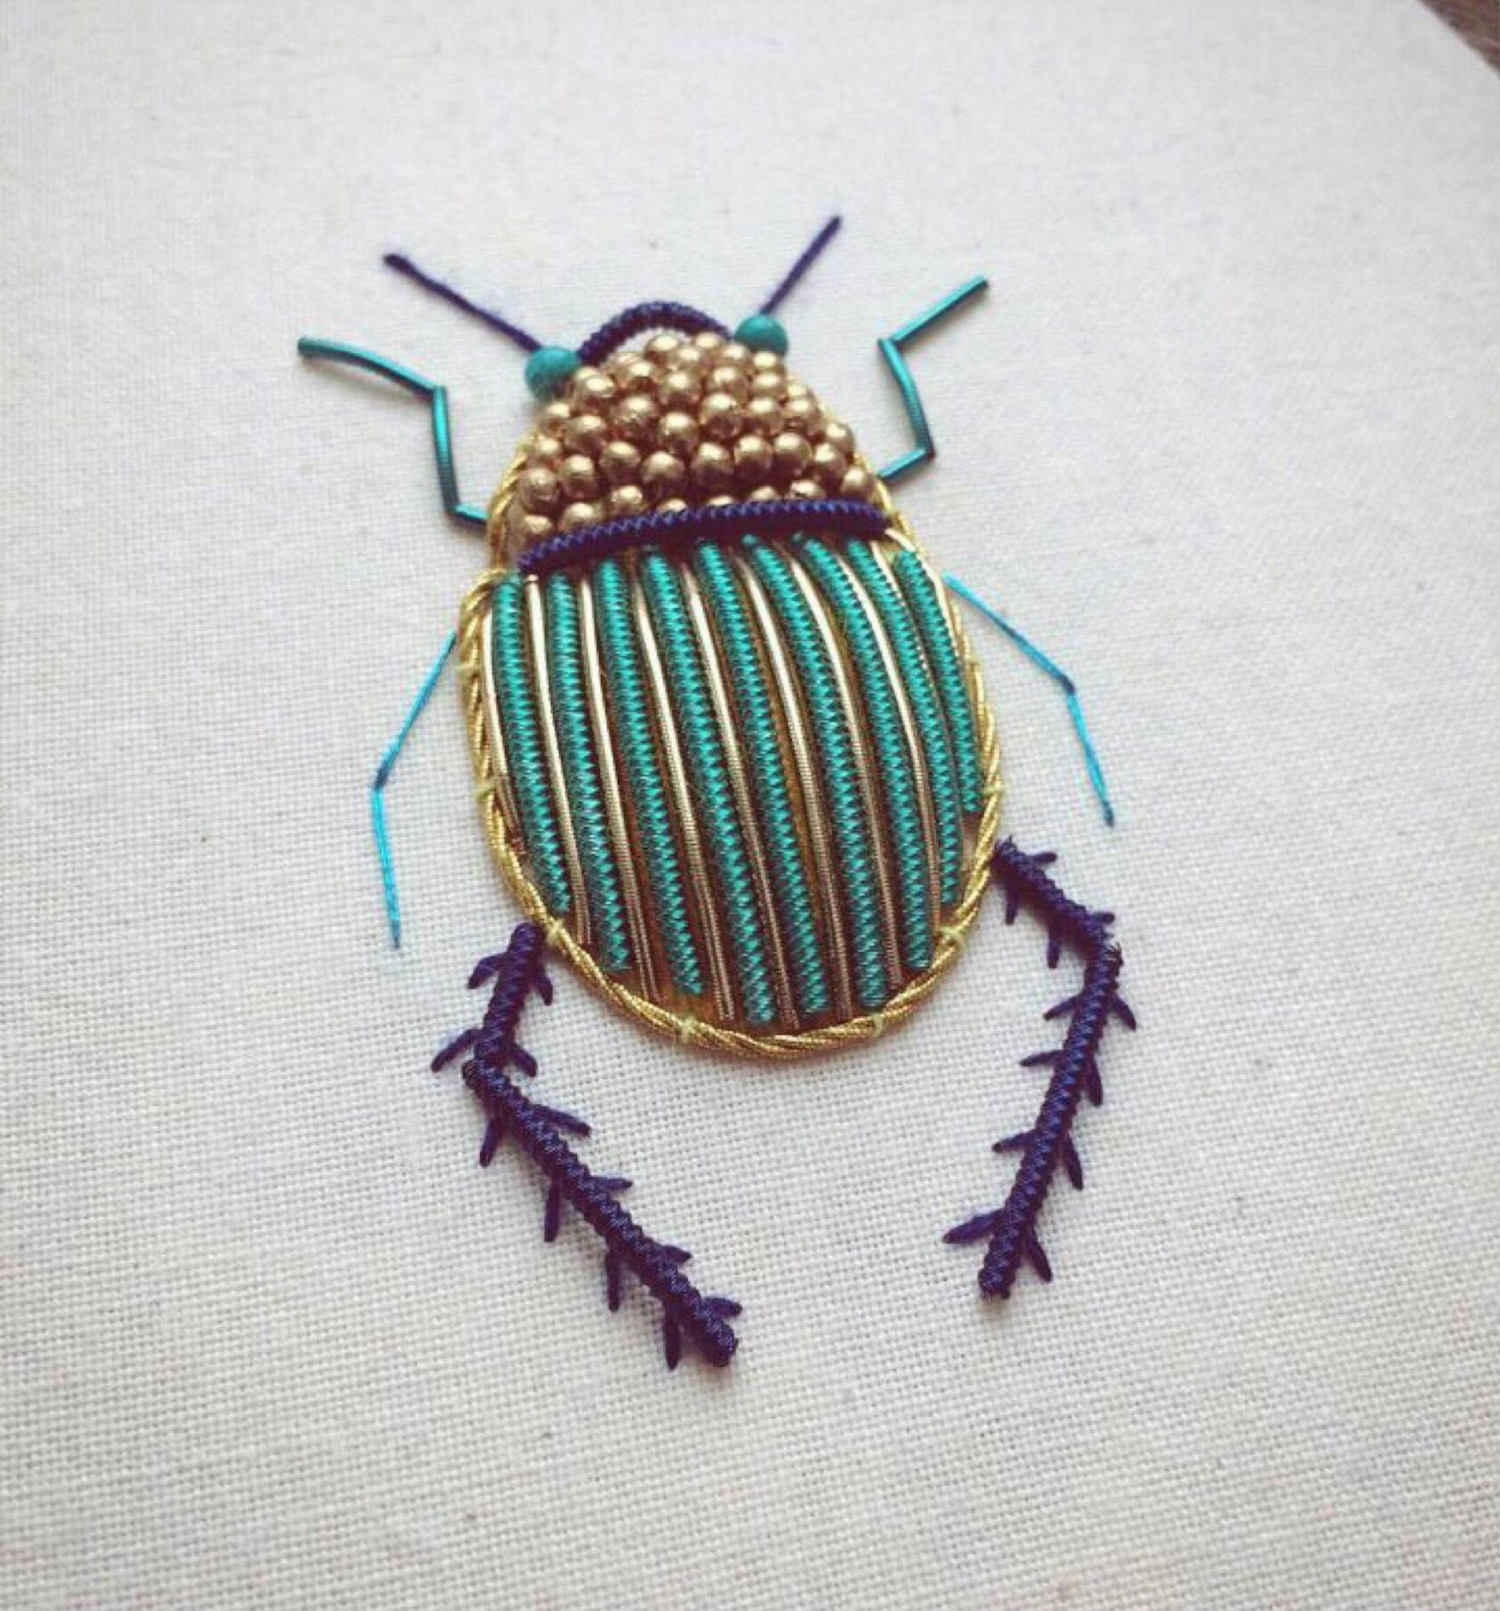 Embroidery by Humayrah Bint Altaf 